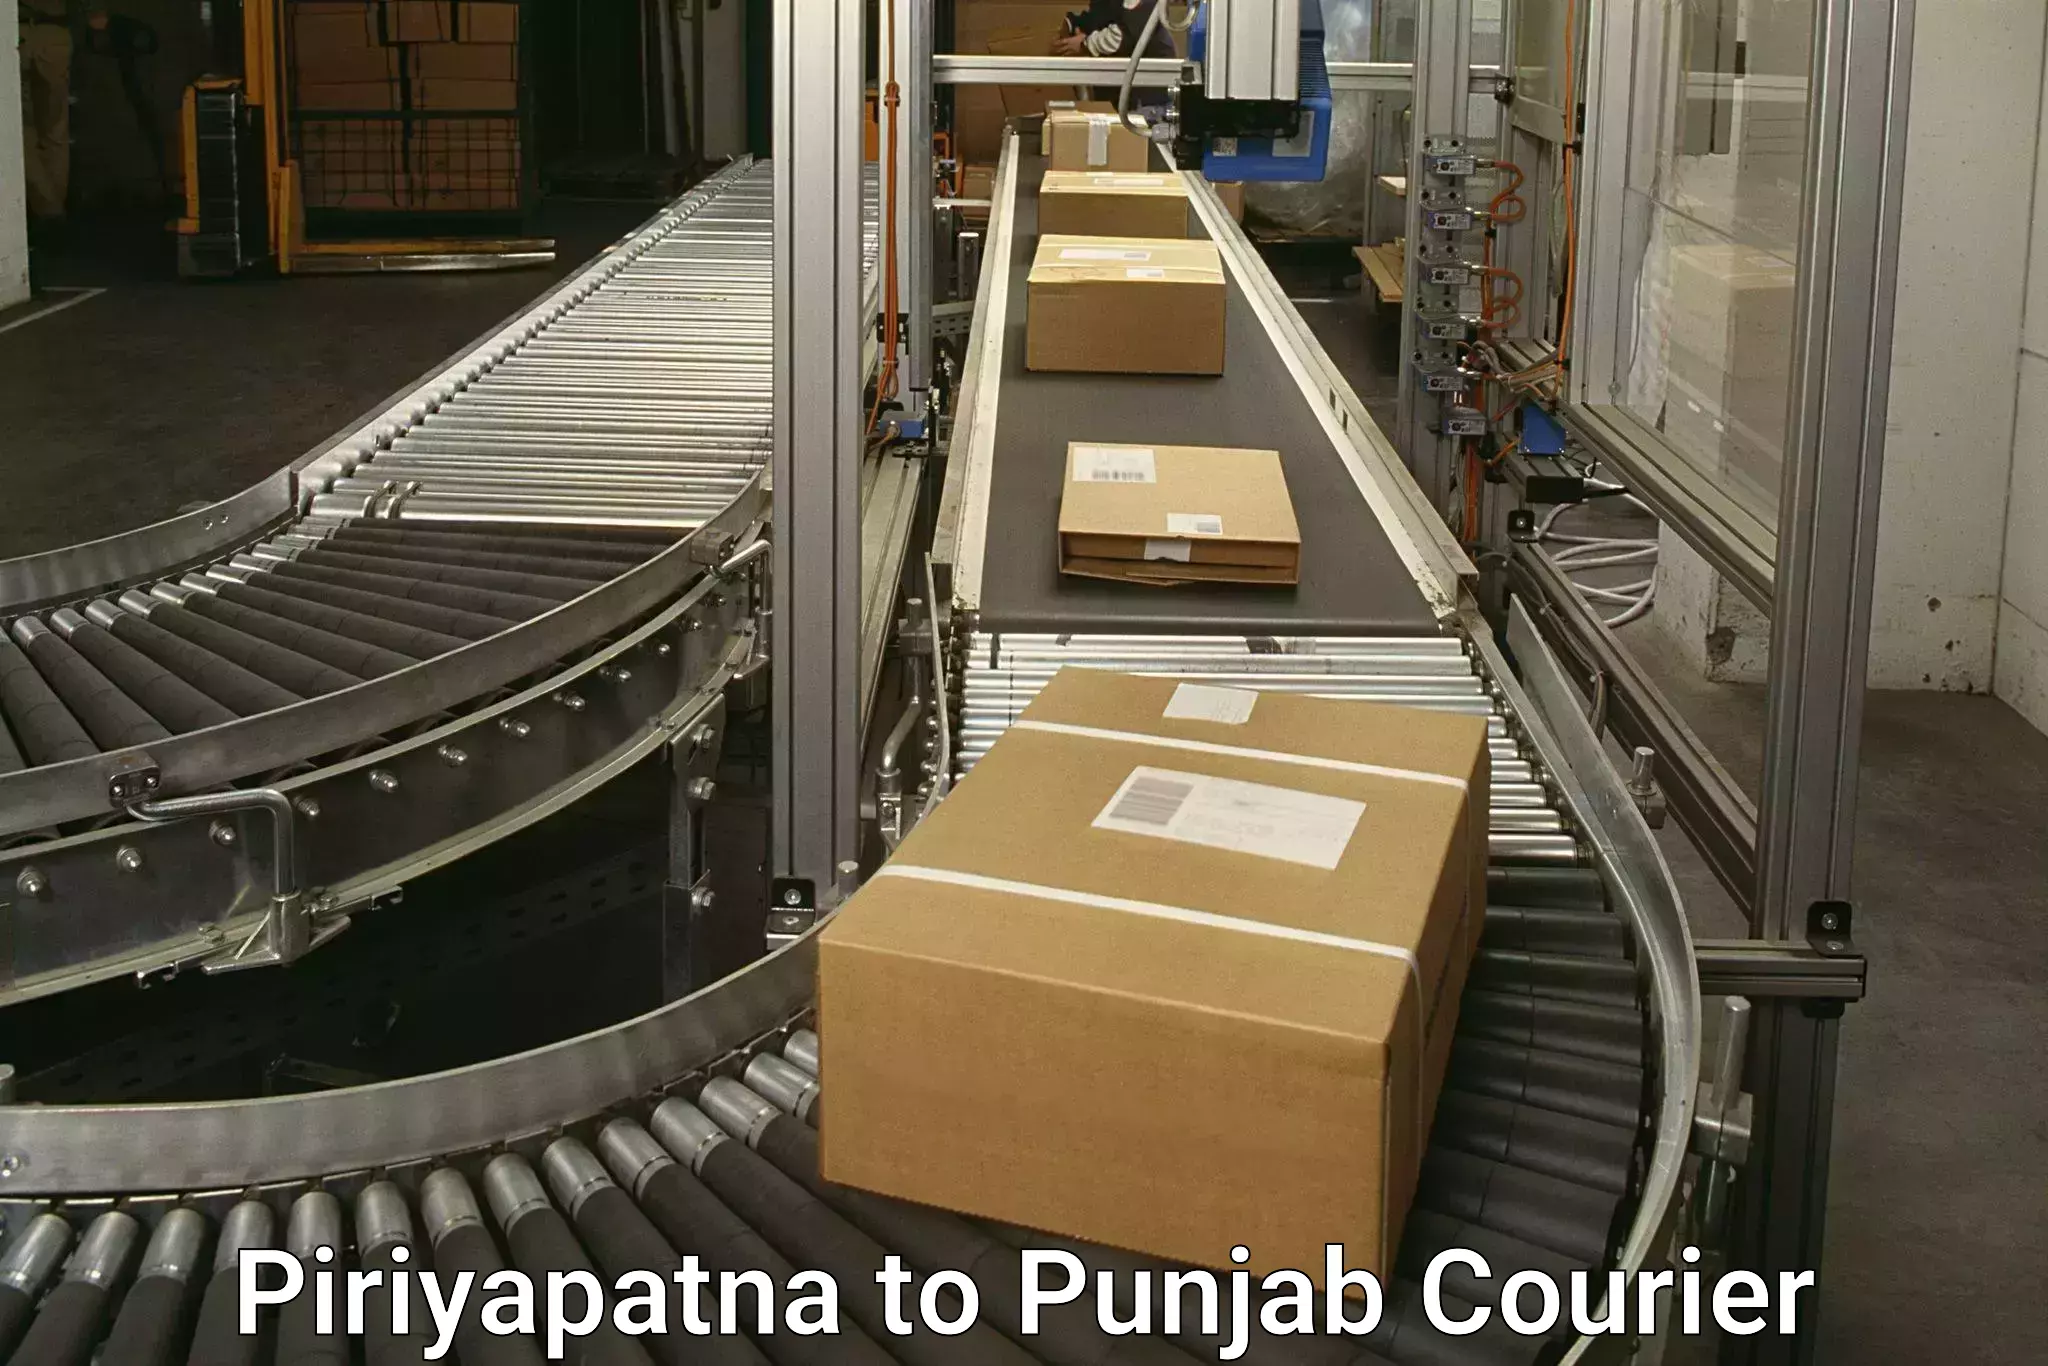 Smart shipping technology Piriyapatna to Central University of Punjab Bathinda